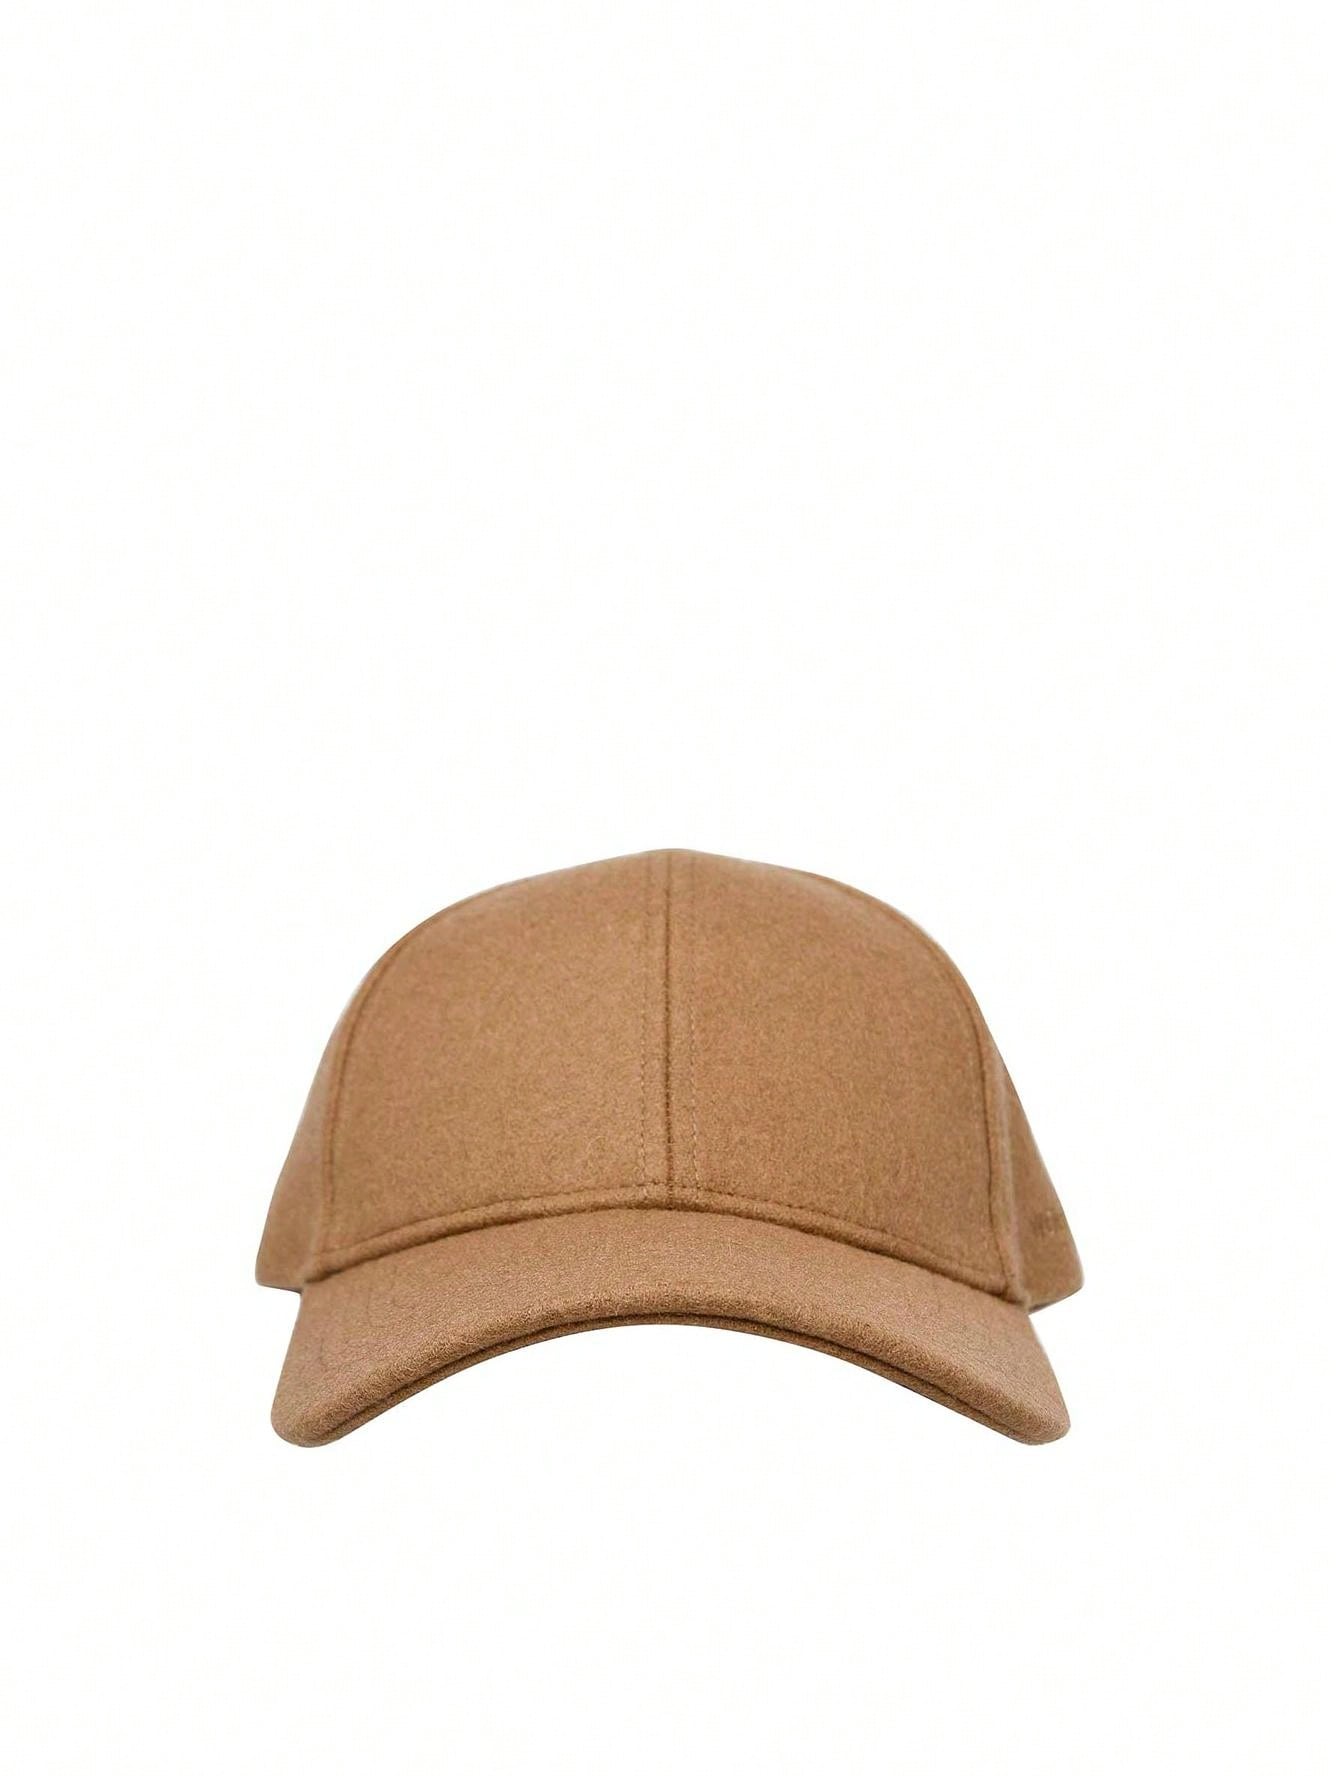 Мужские шапки Woolrich КОРИЧНЕВЫЕ CFWOAC0230MRUT3536734, коричневый woolrich easy